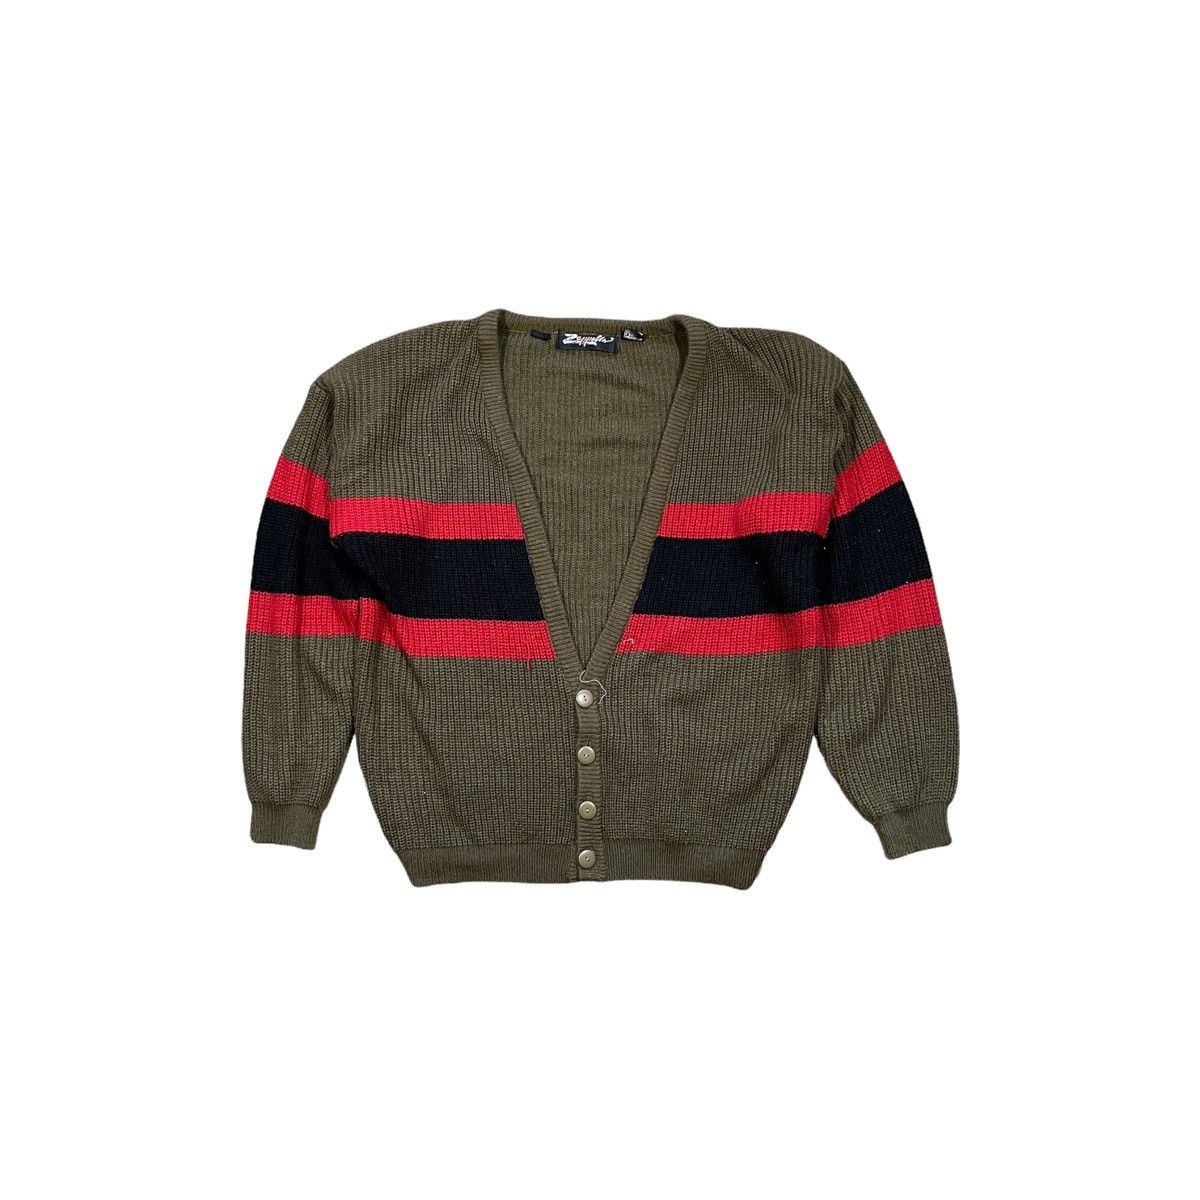 Vintage Vintage Zepellin Striped Cardigan Sweater Size US L / EU 52-54 / 3 - 1 Preview